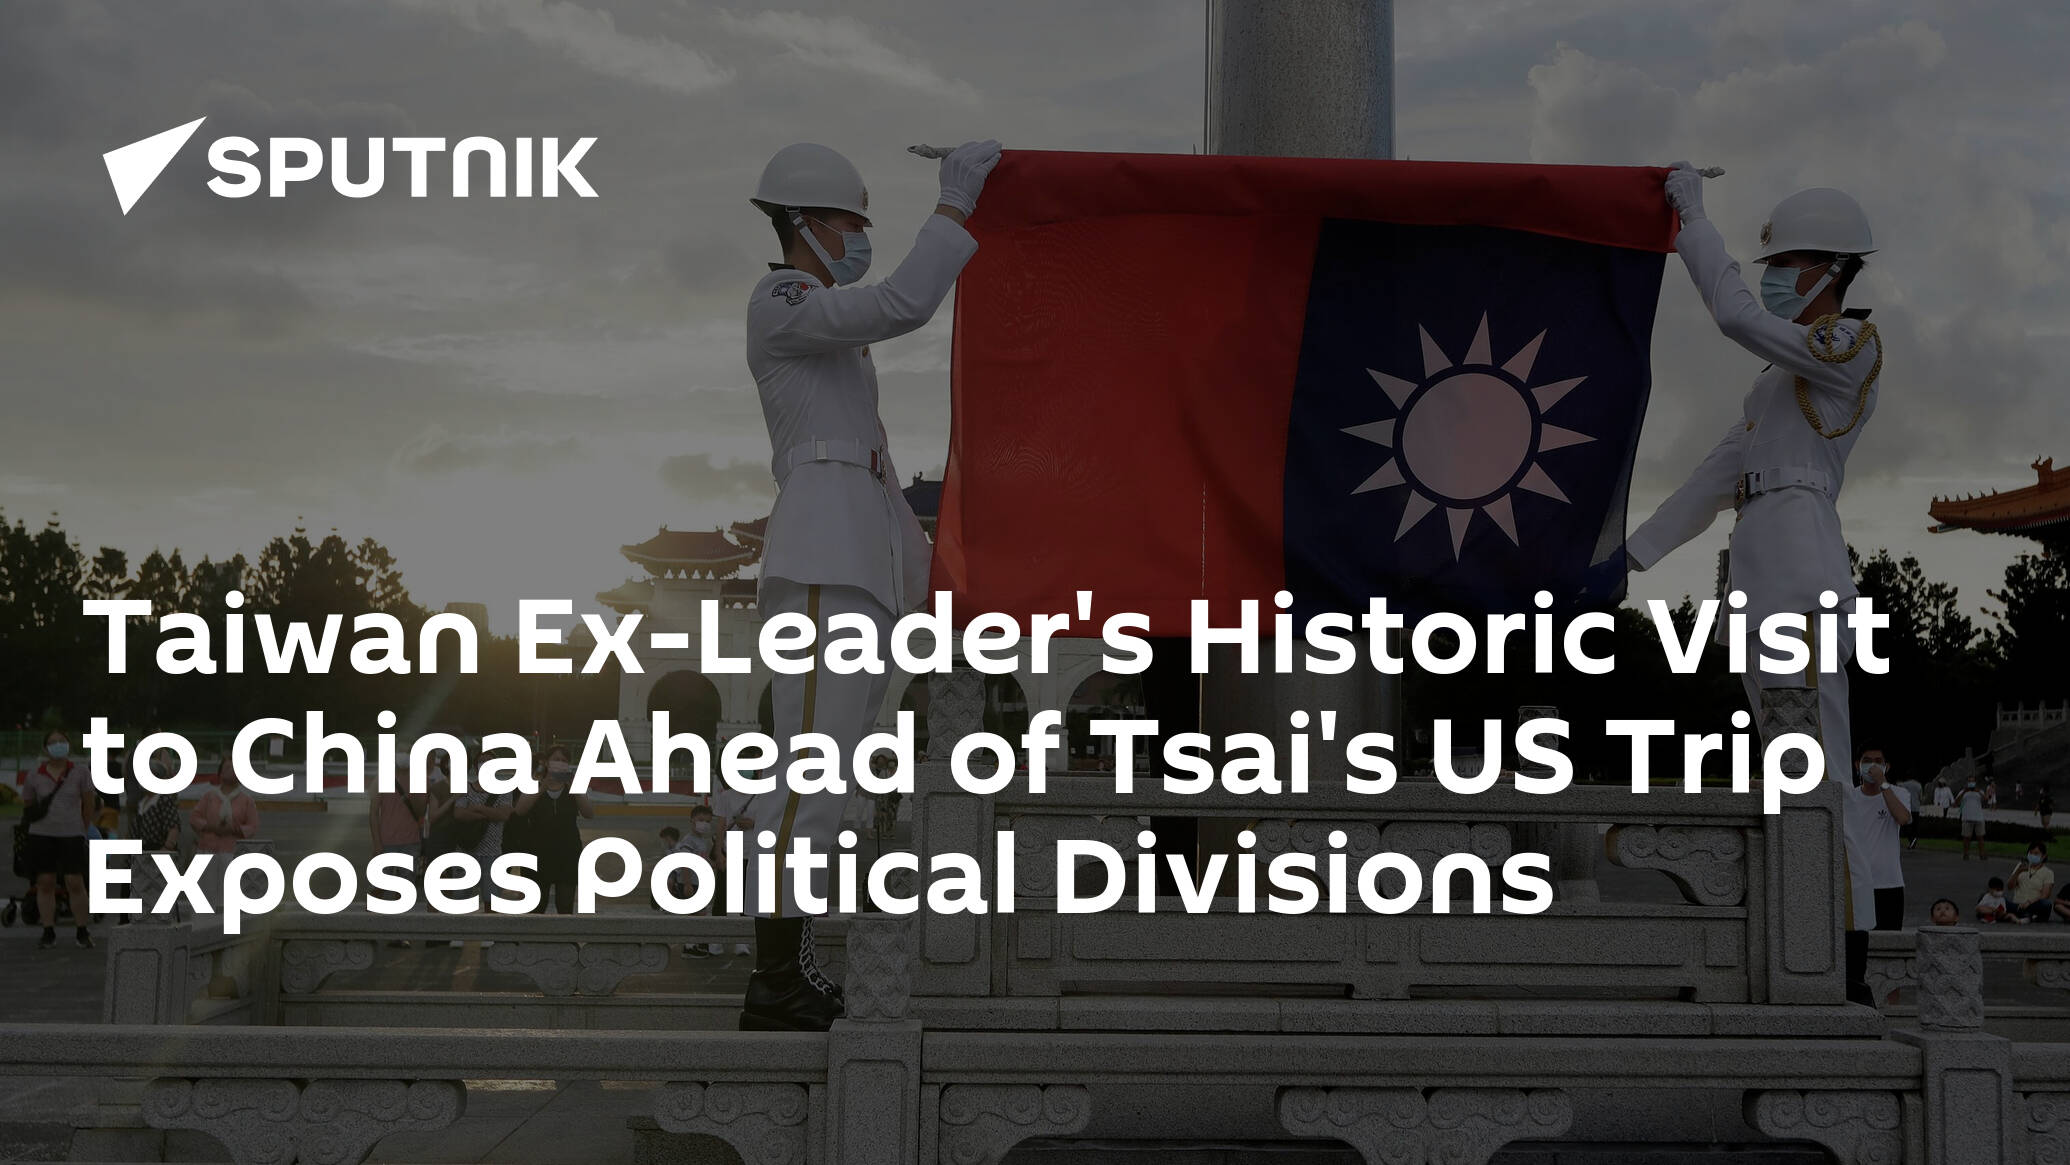 Taiwan Ex-Leader's Historic Visit to China Ahead of Tsai's US Trip Exposes Political Divisions